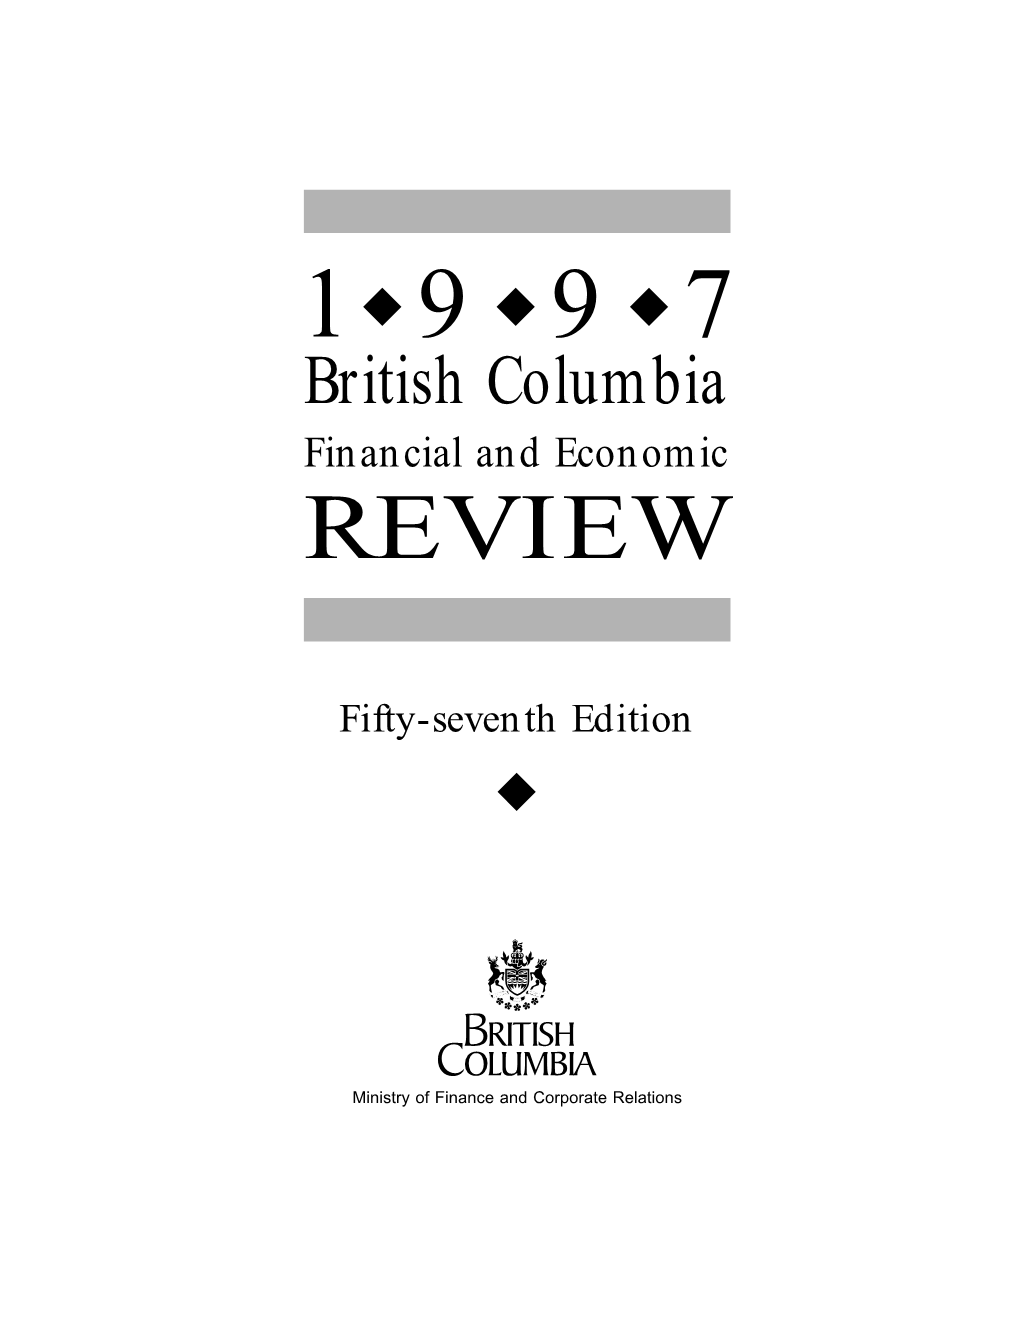 British Columbia Financial & Economic Review 1997